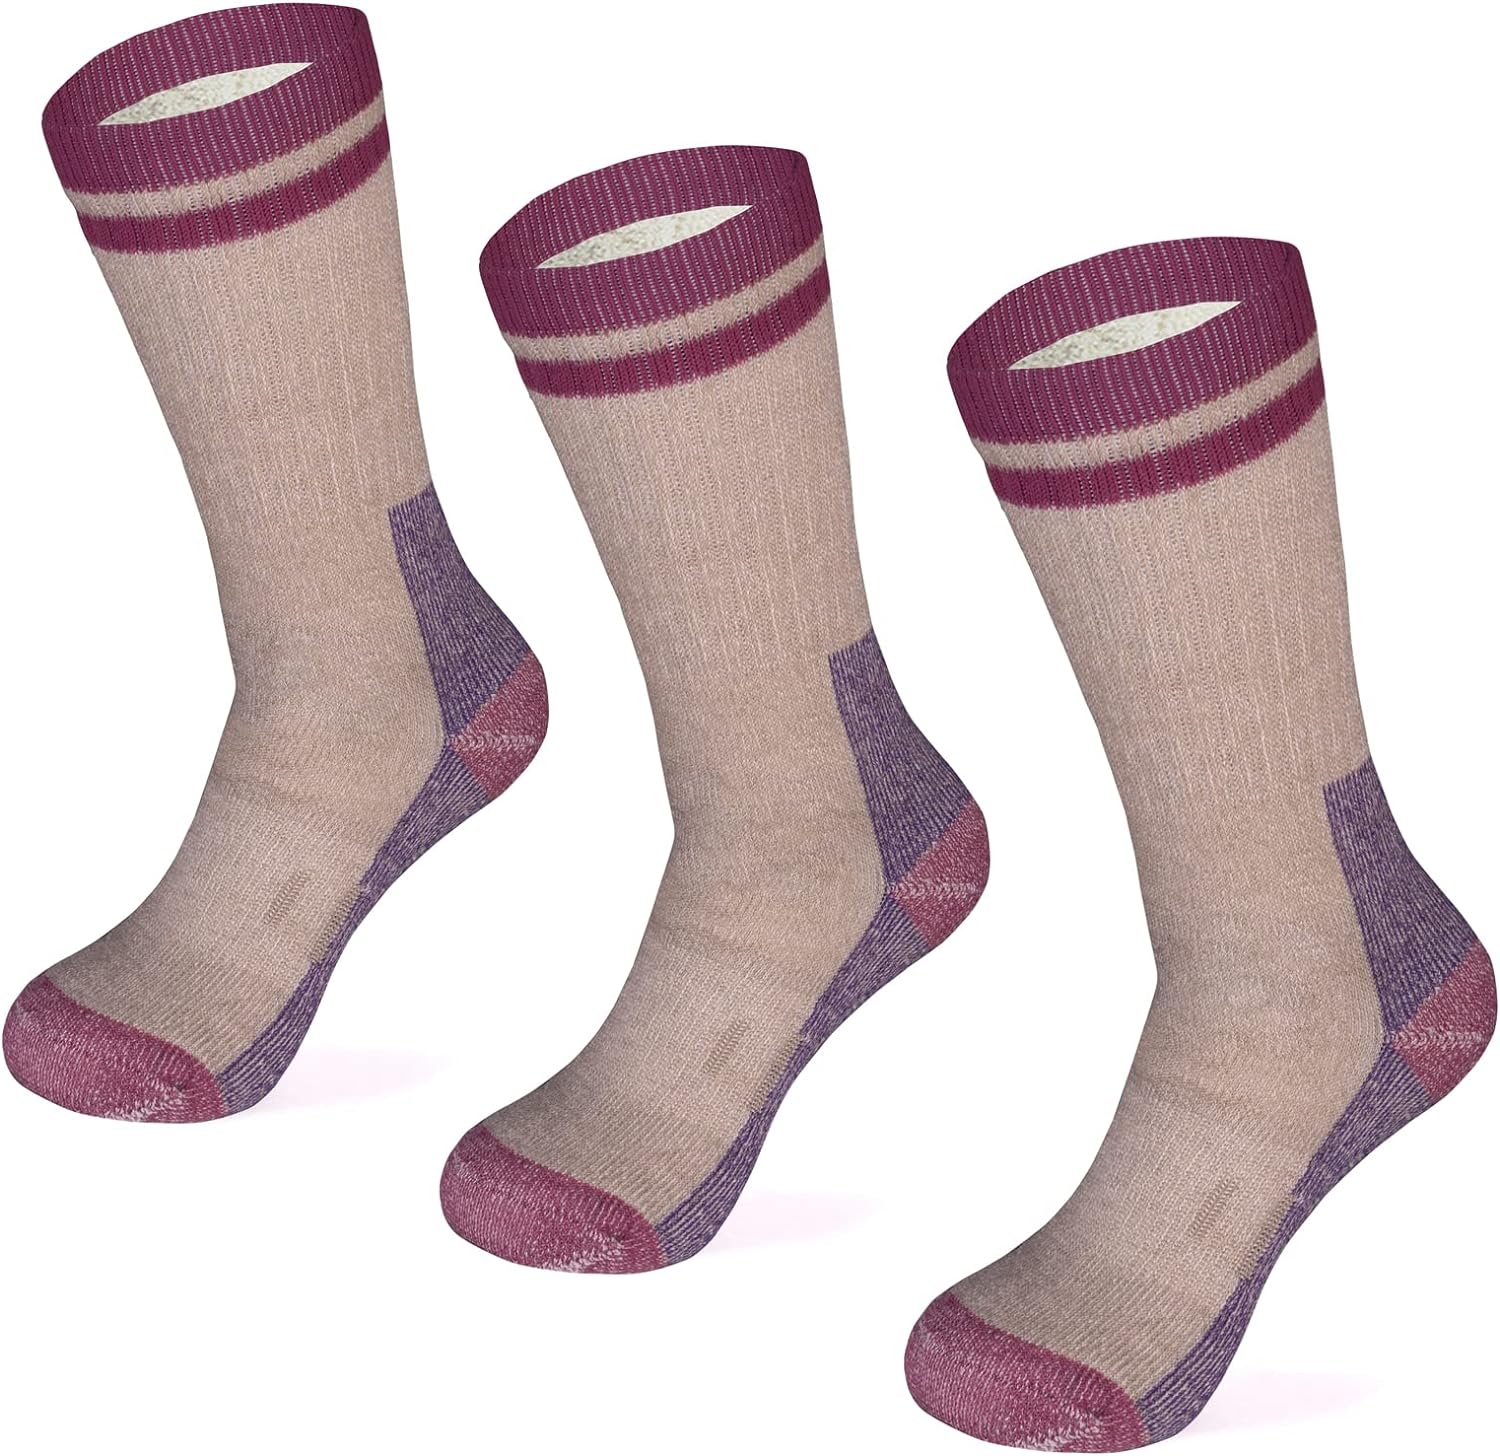 MERIWOOL Merino Wool Hiking Socks for Men and Women – 3 Pairs Midweight  Cushione